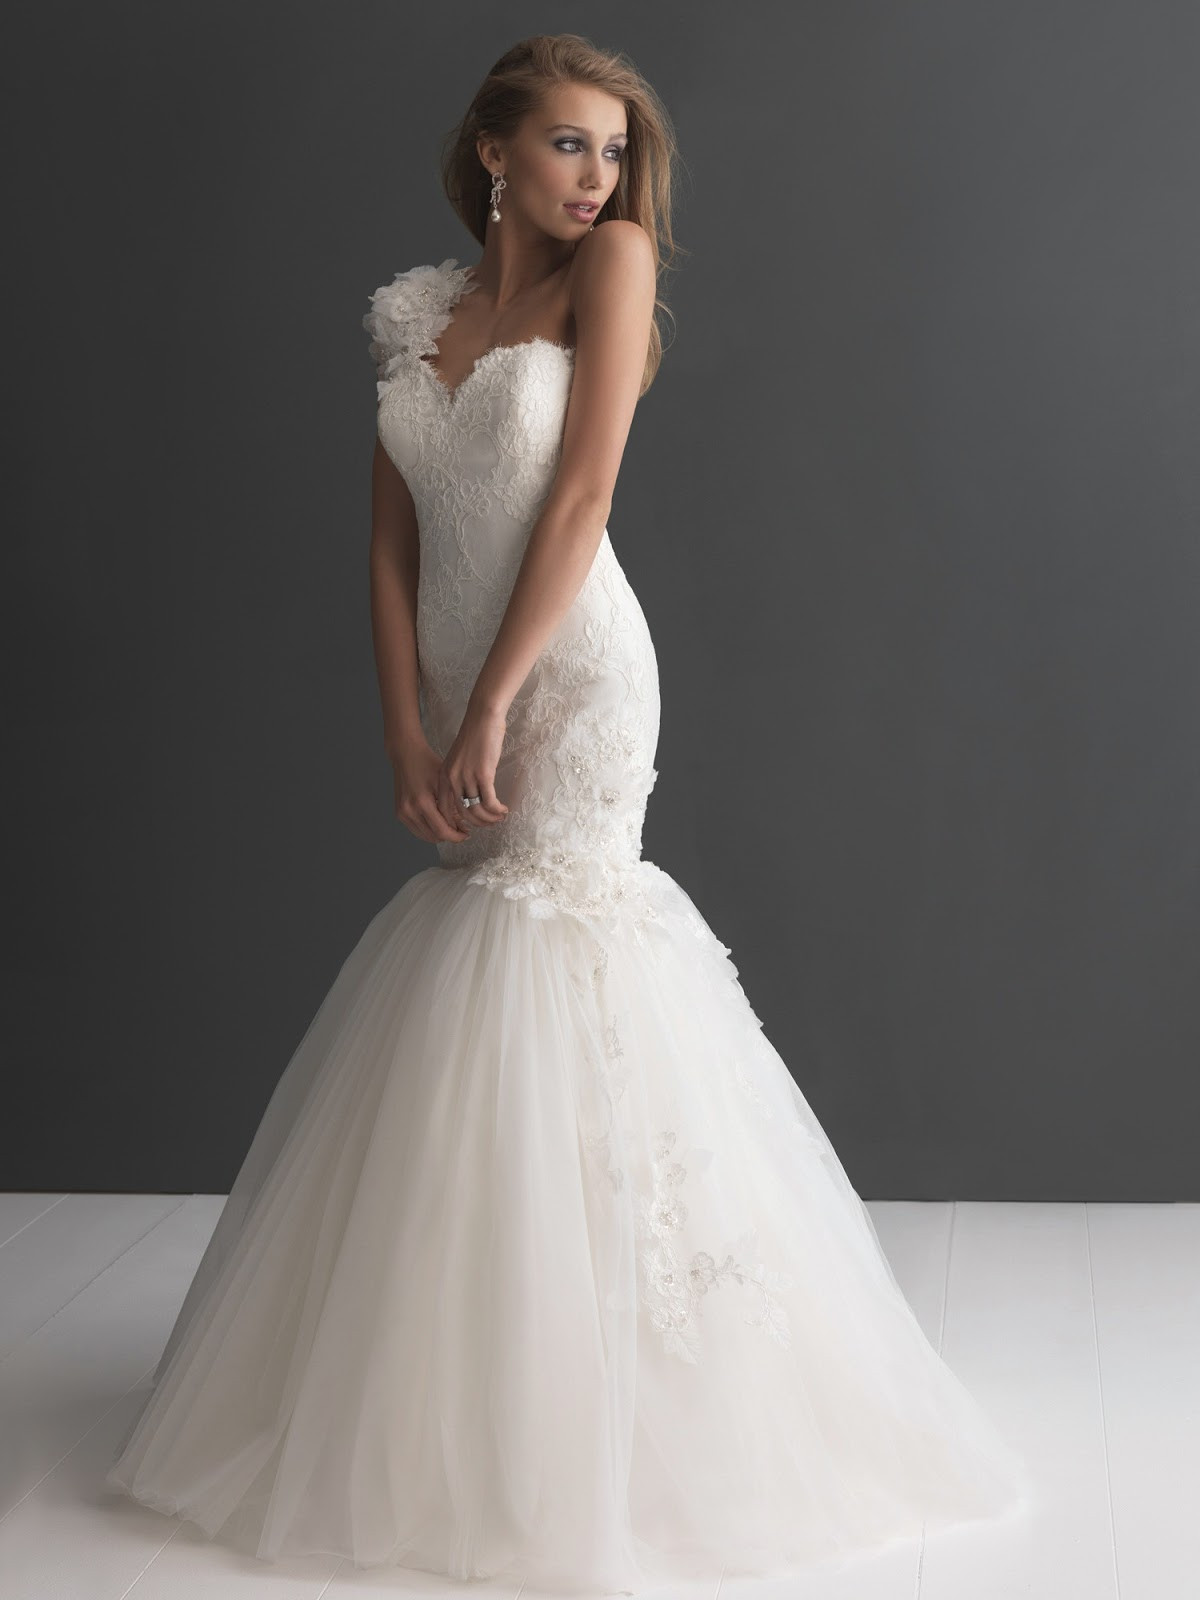 One Shoulder Wedding Dress
 DressyBridal Allure Wedding Dresses Fall 2013 Collection